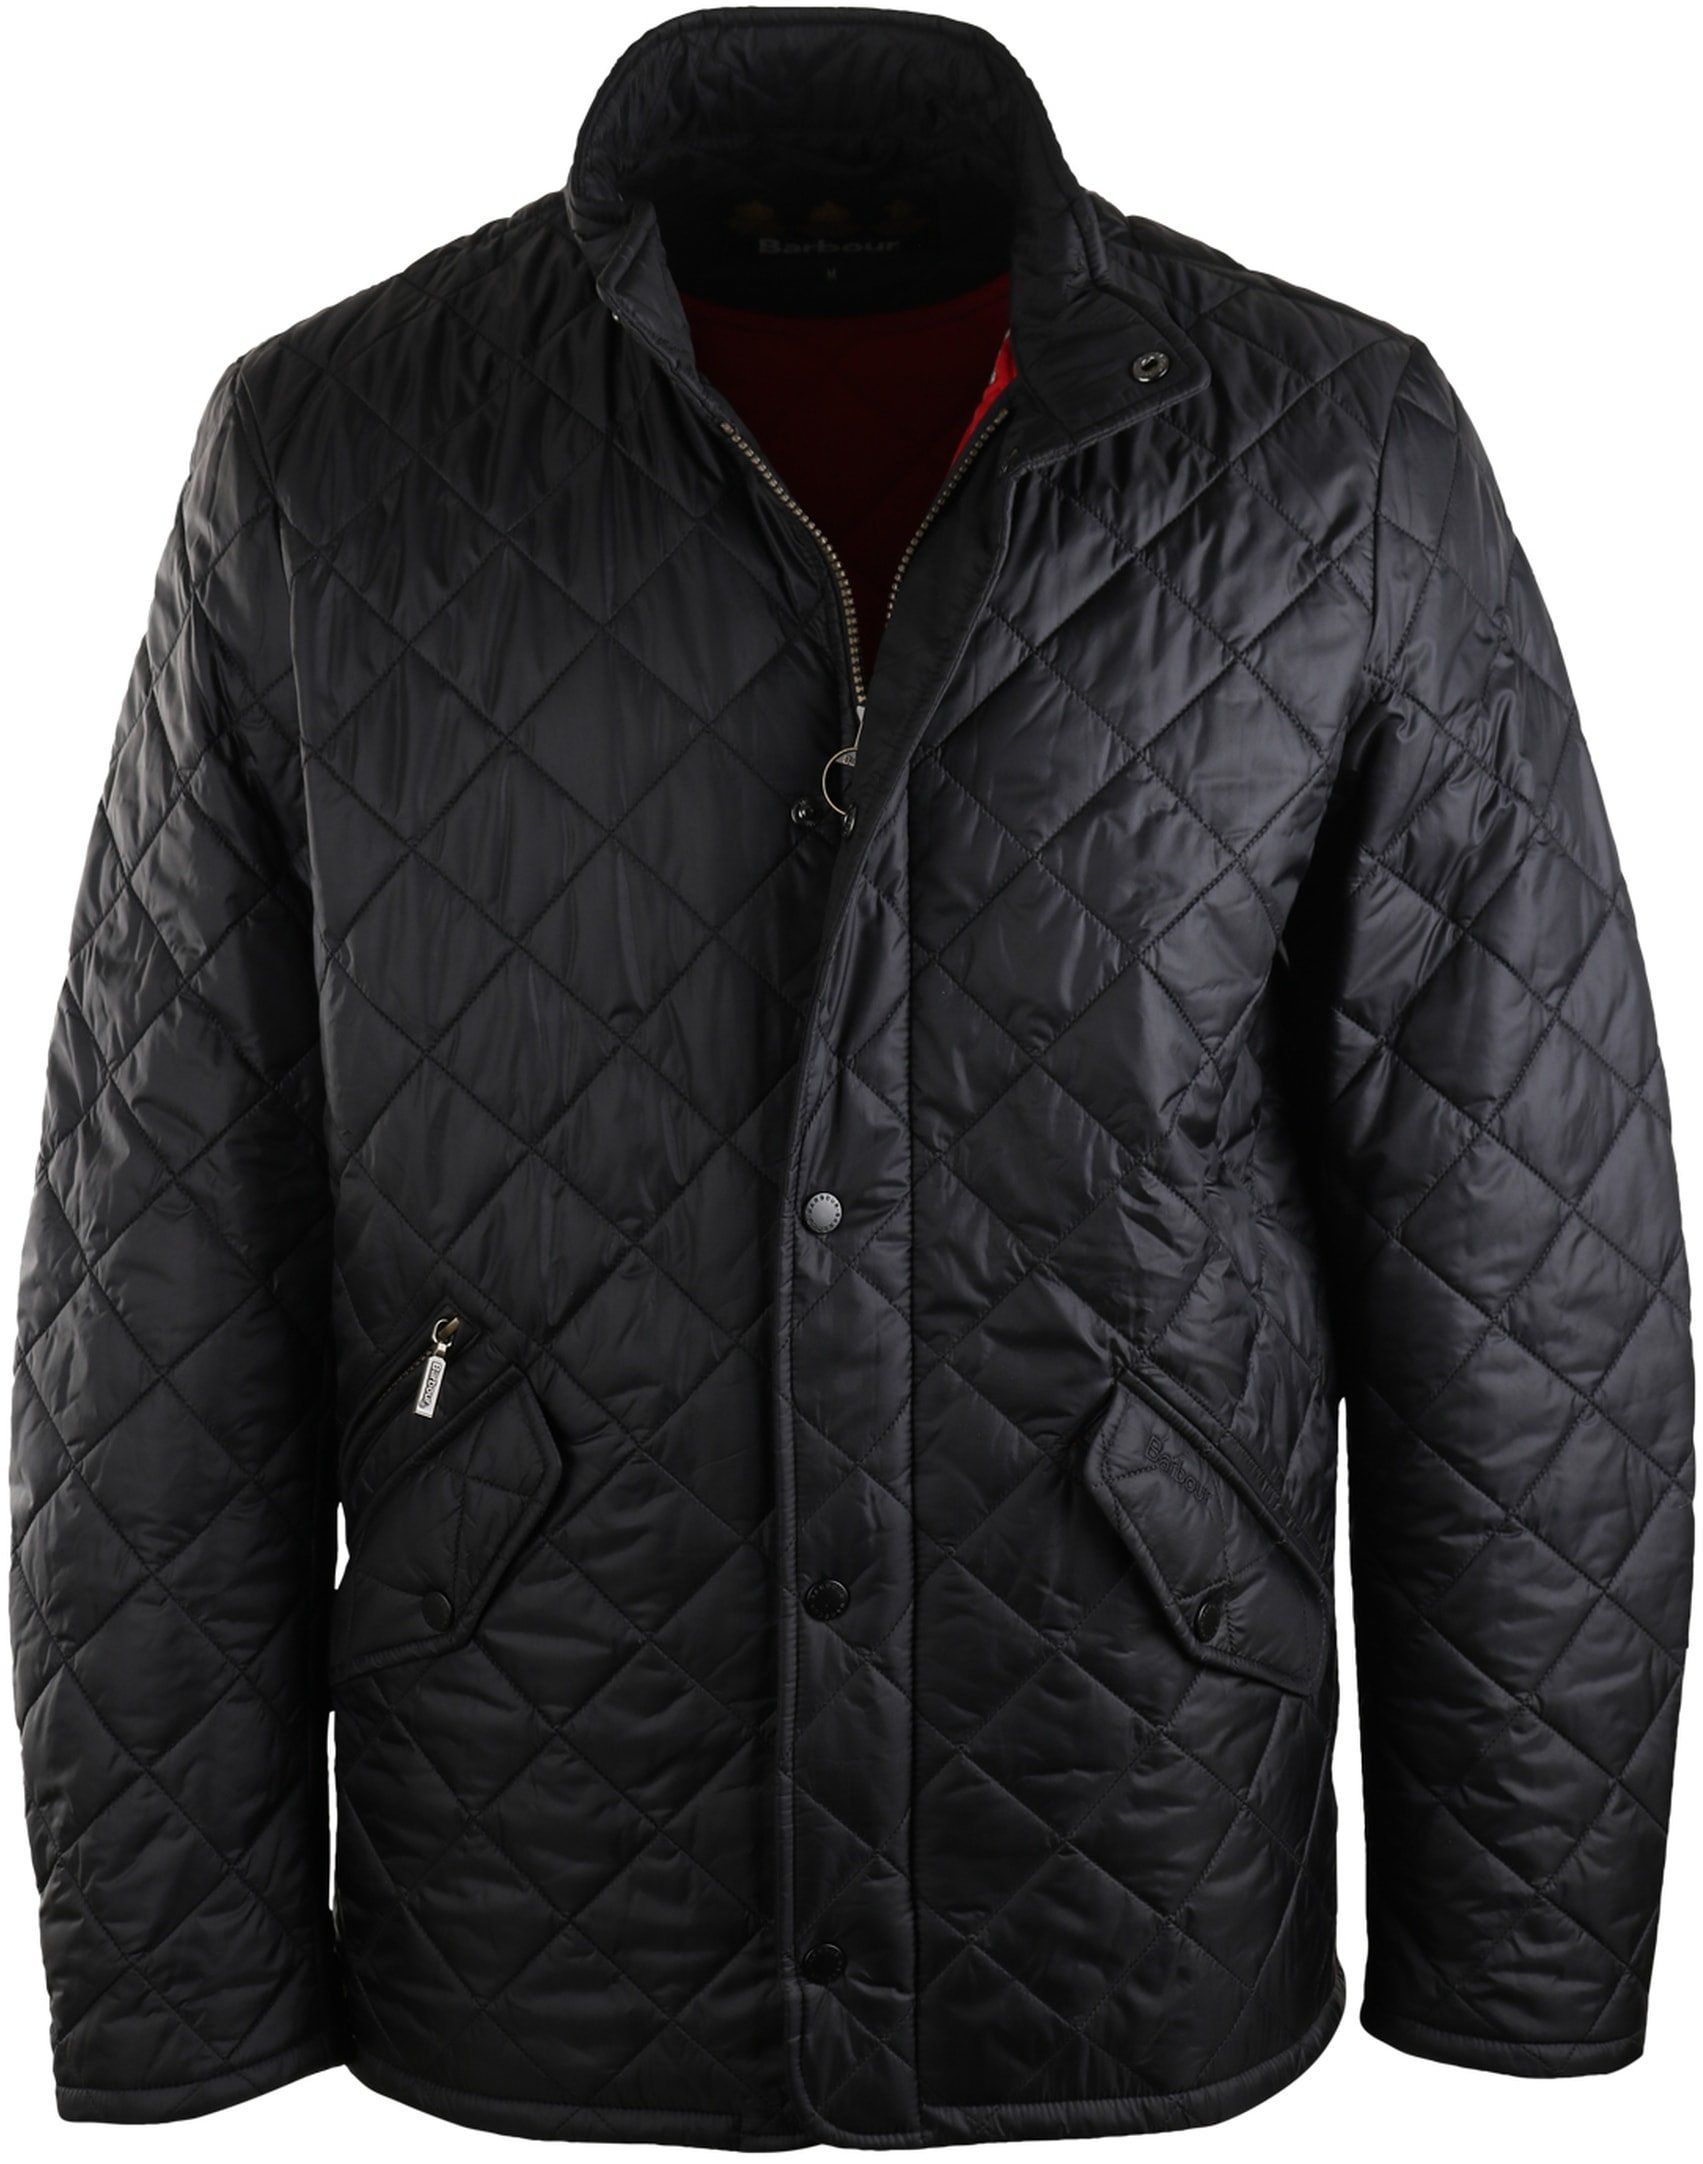 Barbour Flyweight Chelsea Jacket Black size M